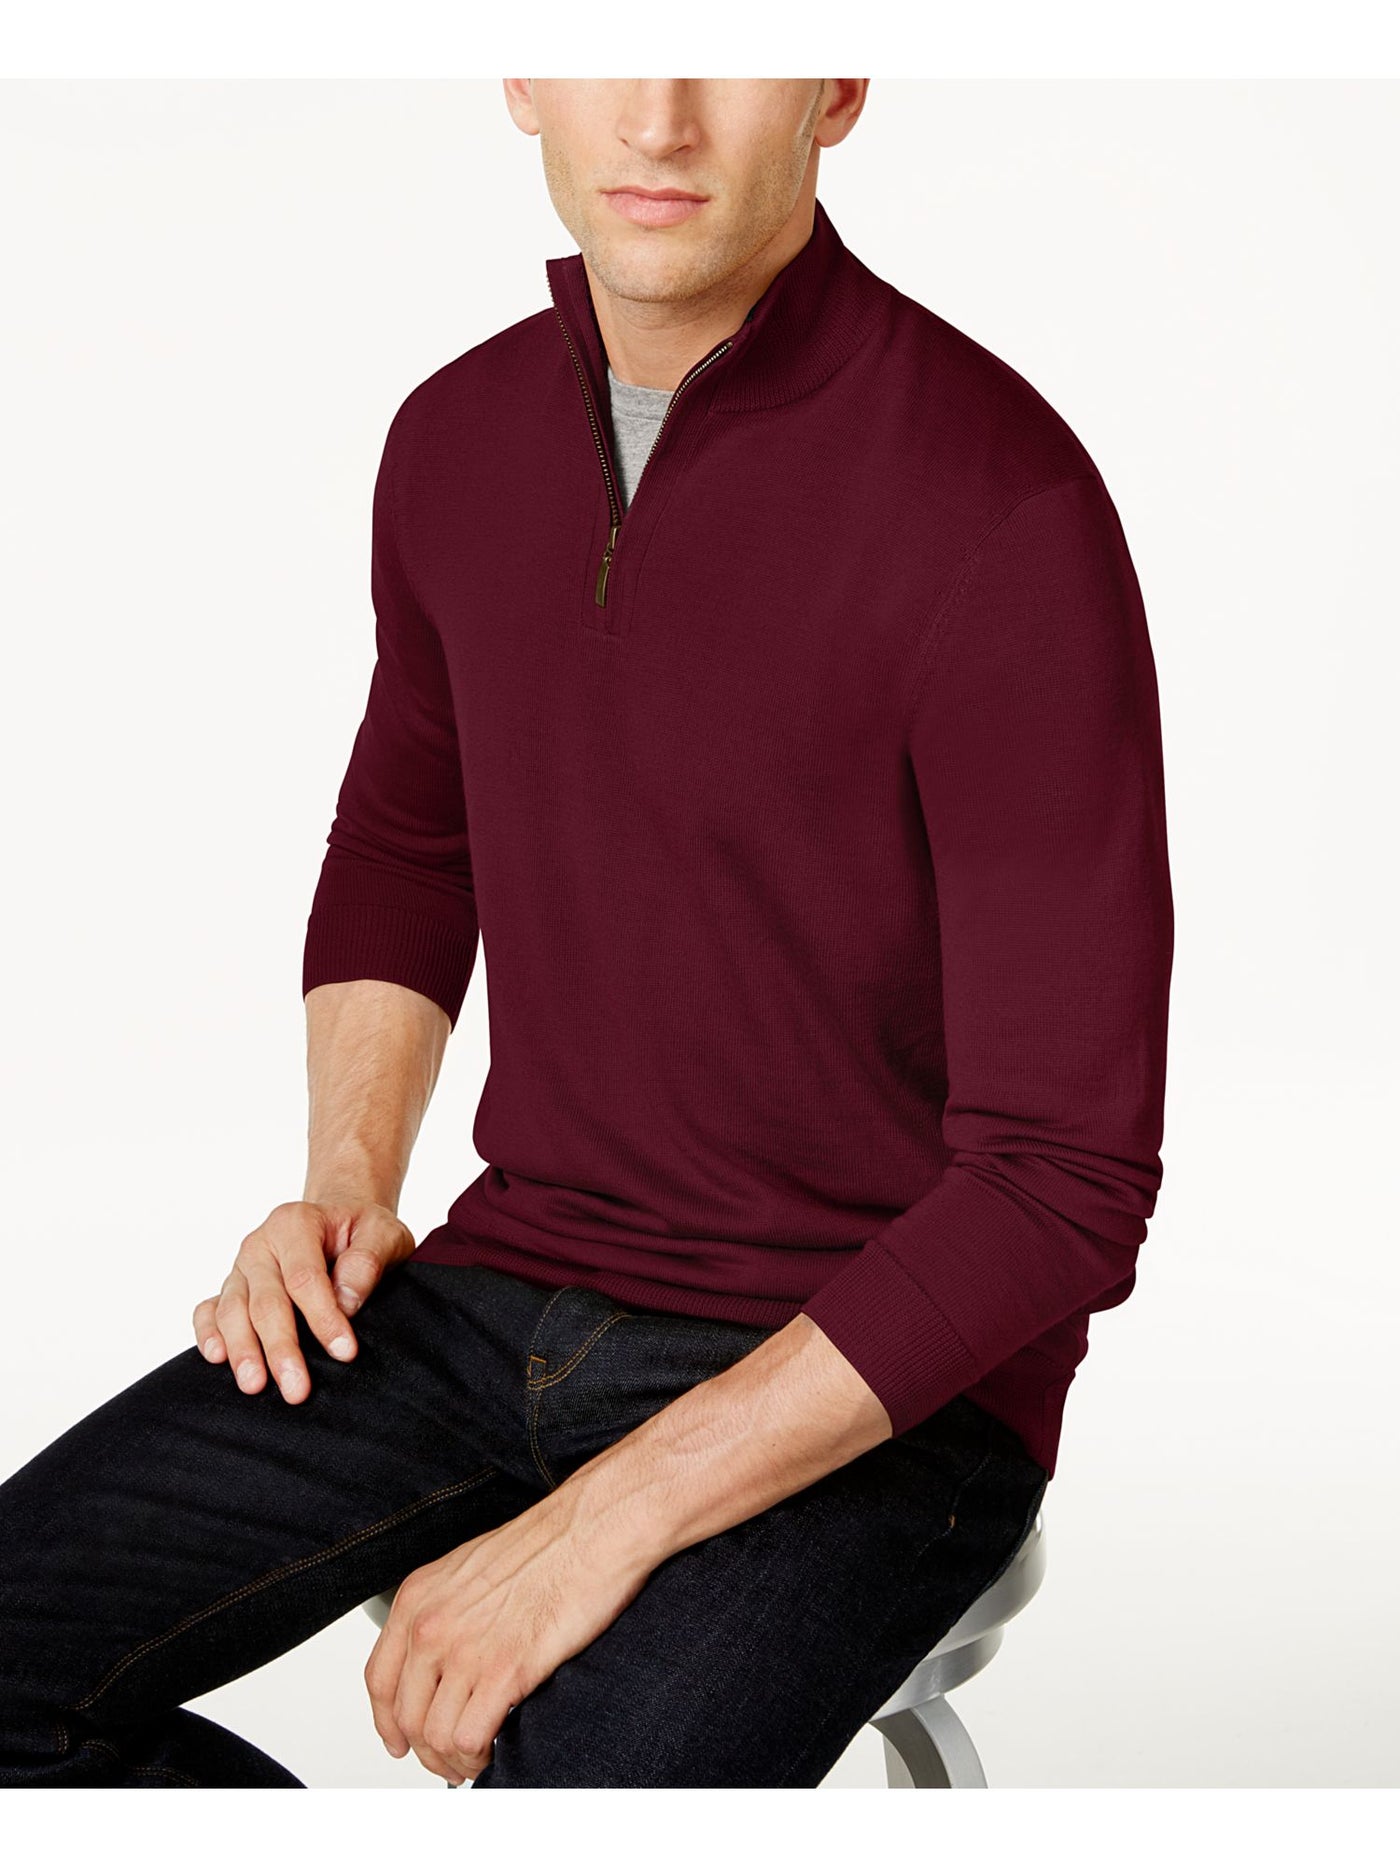 CLUBROOM Mens Maroon Mock Quarter-Zip Wool Blend Pullover Sweater S